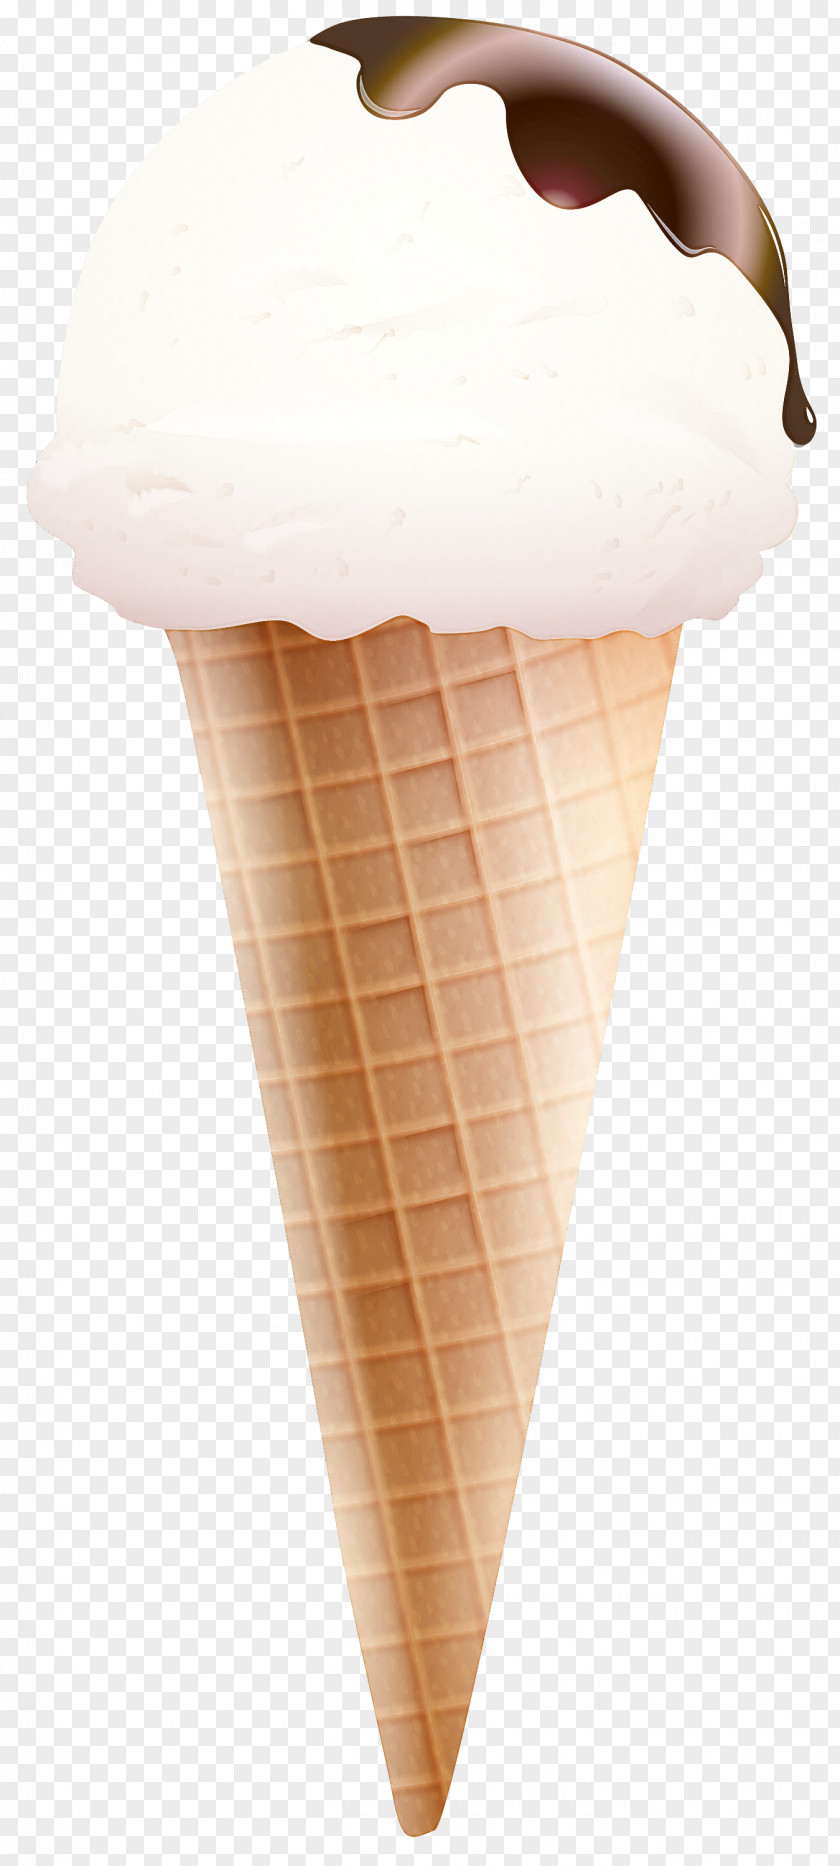 Cone Chocolate Ice Cream PNG